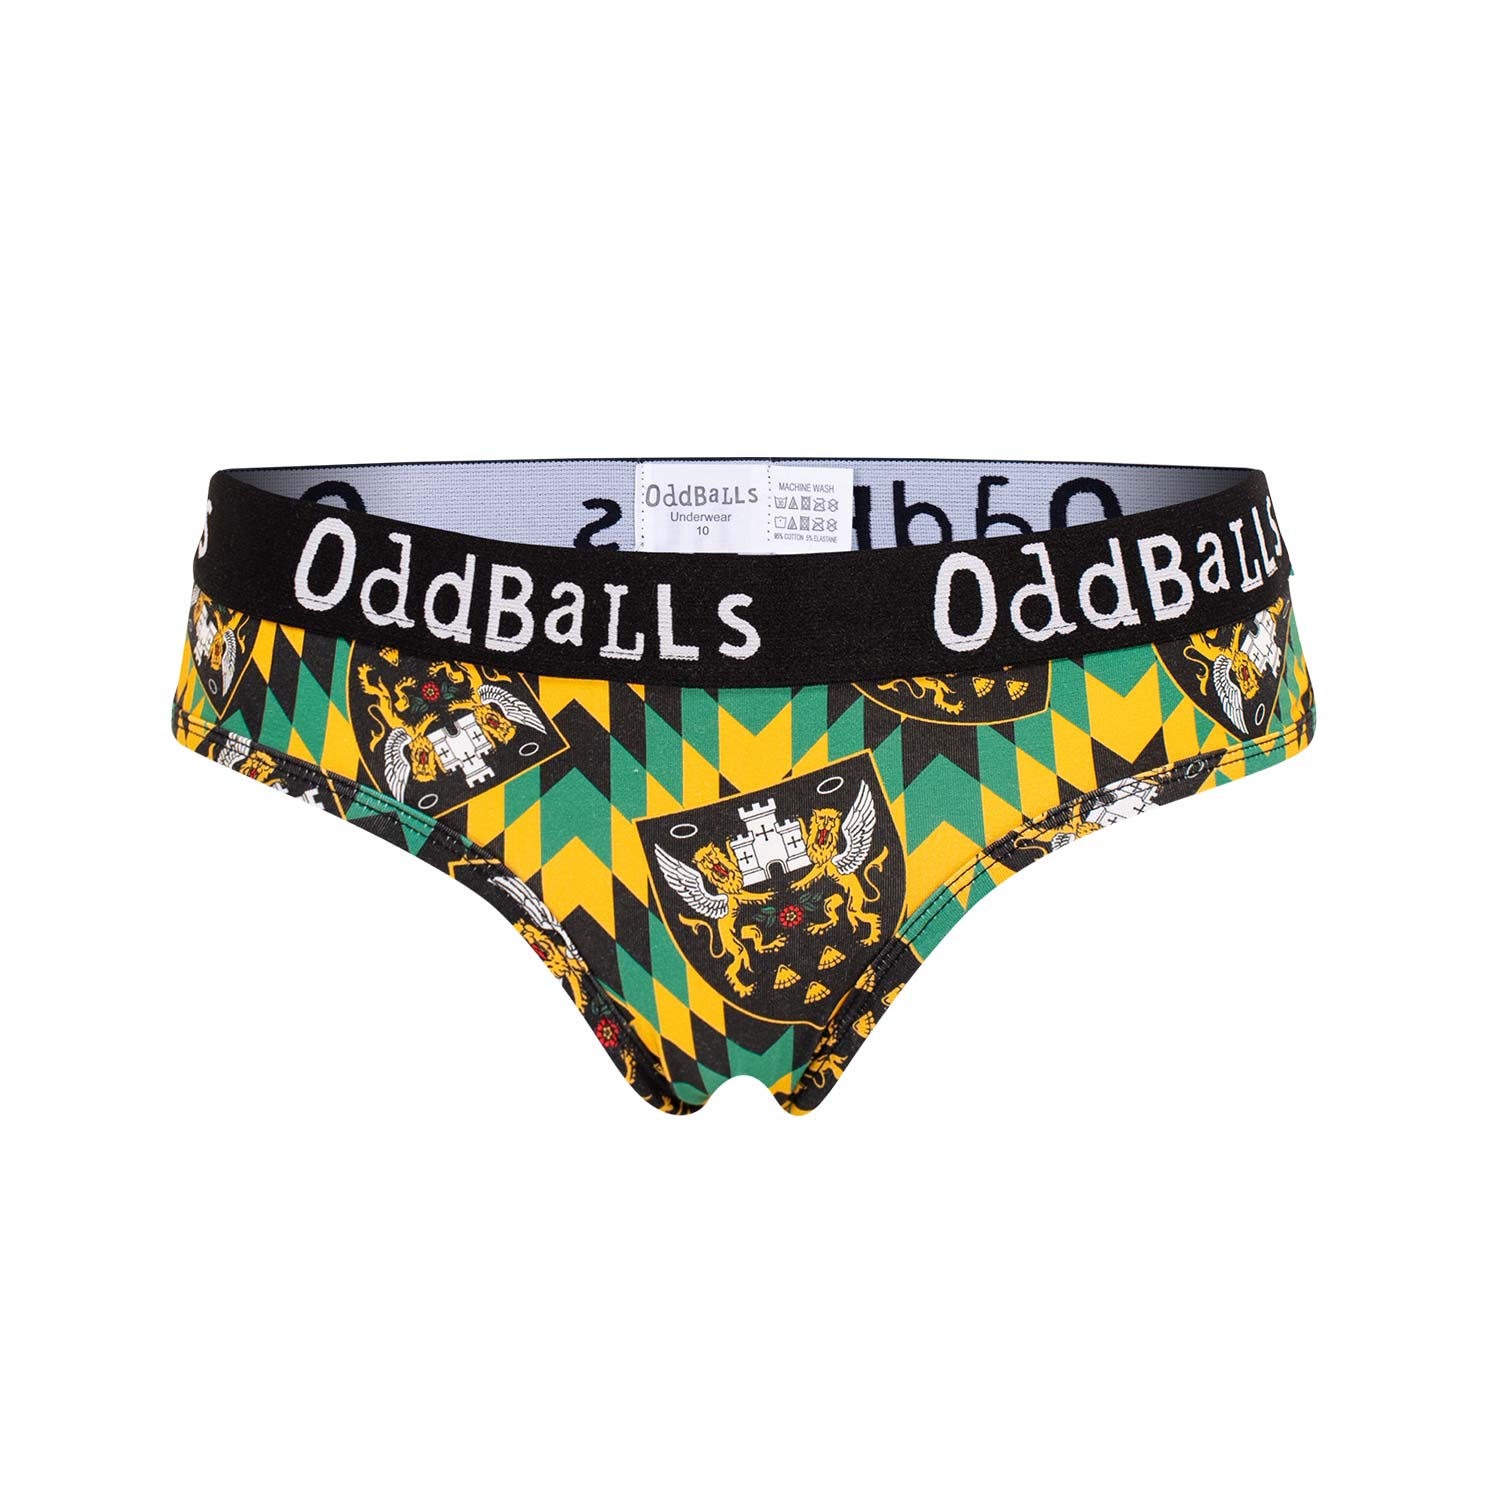 OddBalls - Ladies Boxers Subscription